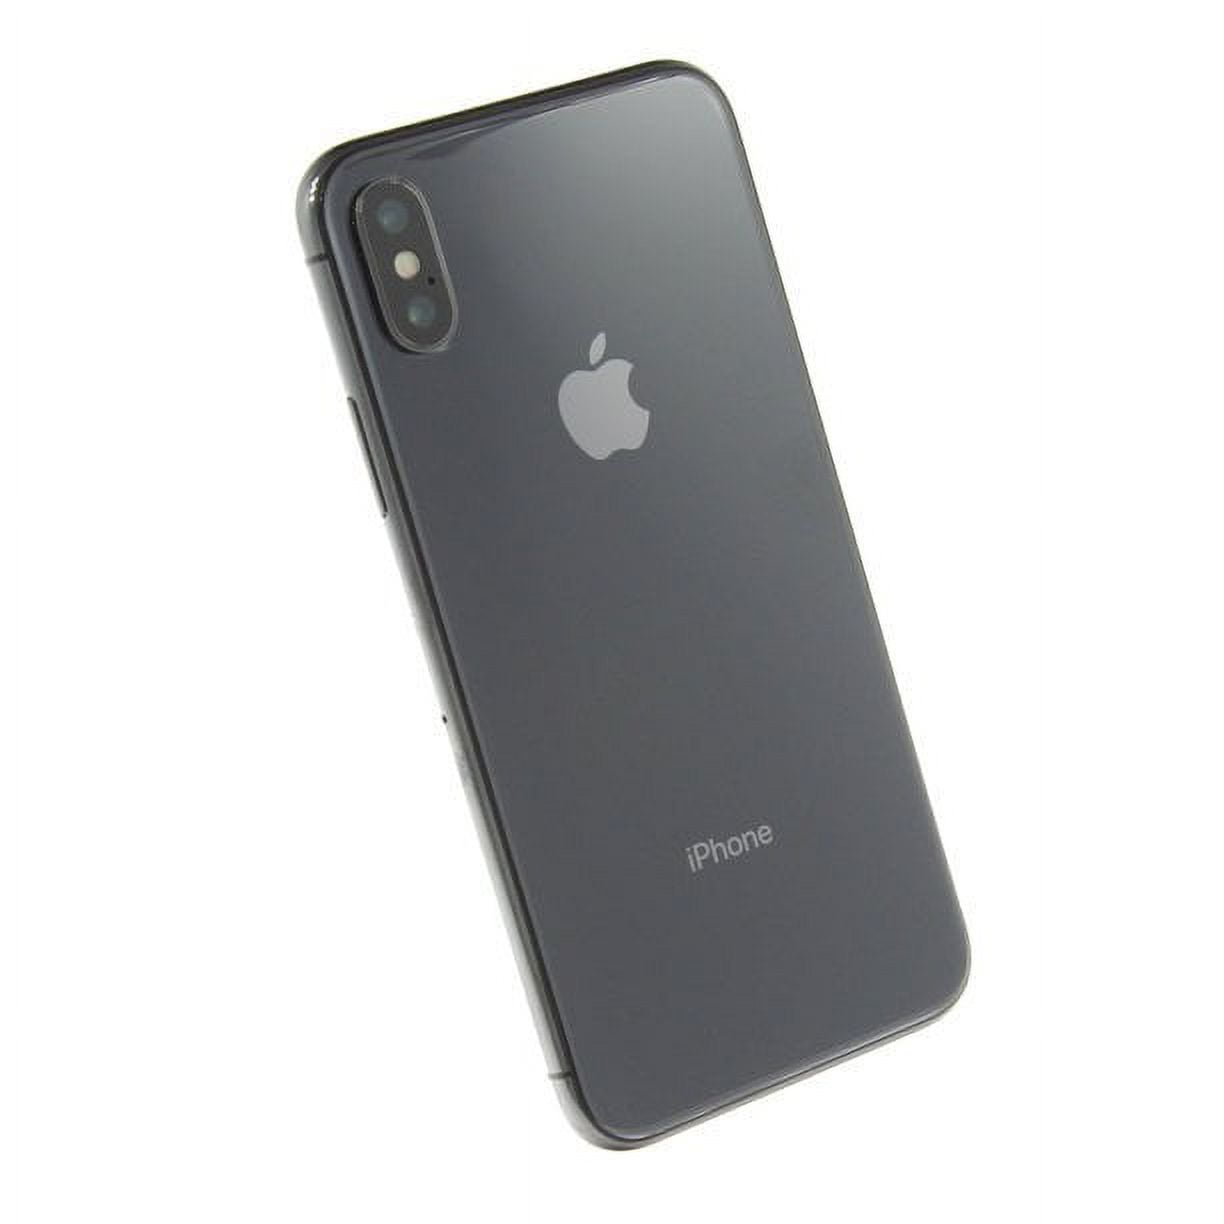 Restored Apple iPhone X a1865 64GB Space Gray Verizon Unlocked